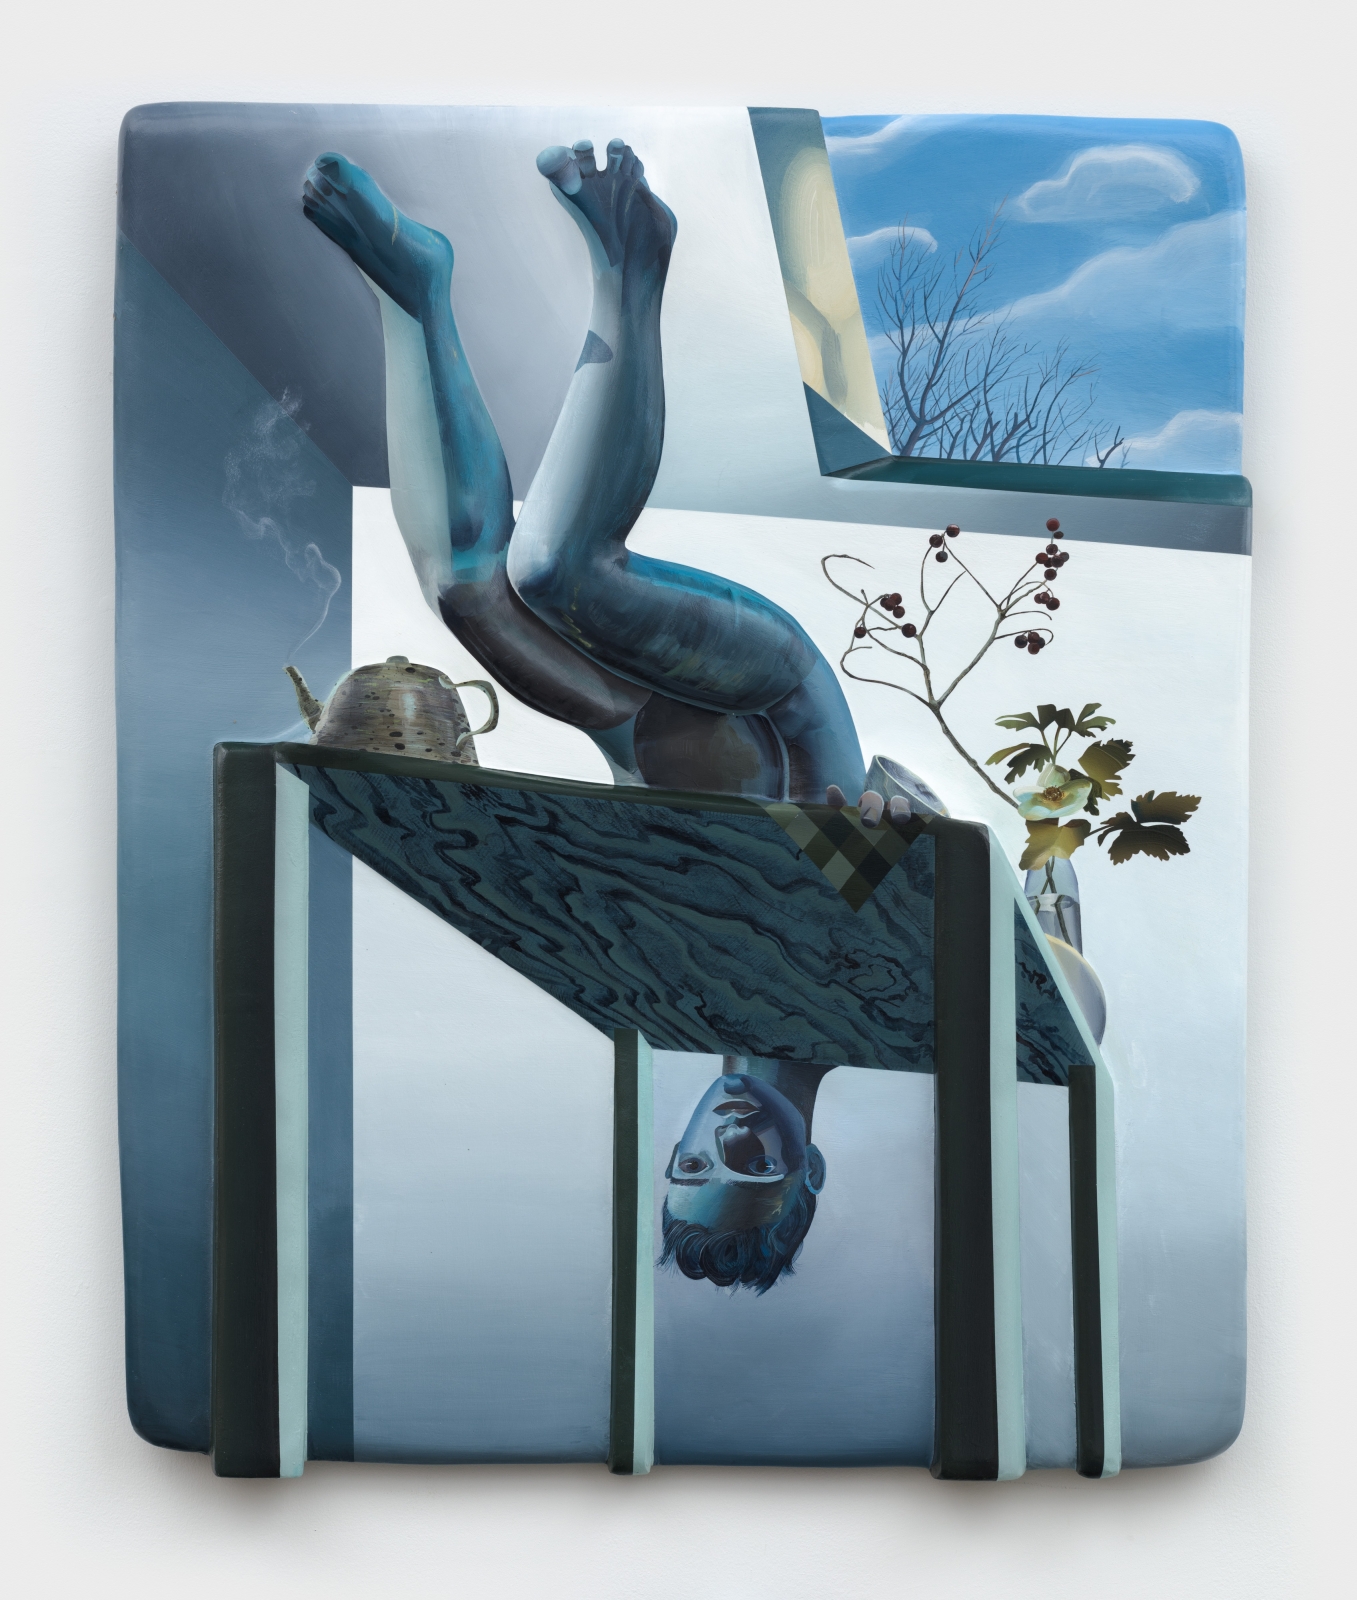 Kyle Dunn
Boy on Table, 2020
acrylic on epoxy resin and foam panel
48 x 40 x 2.5 ins.
121.9 x 101.6 x 5.1 cm